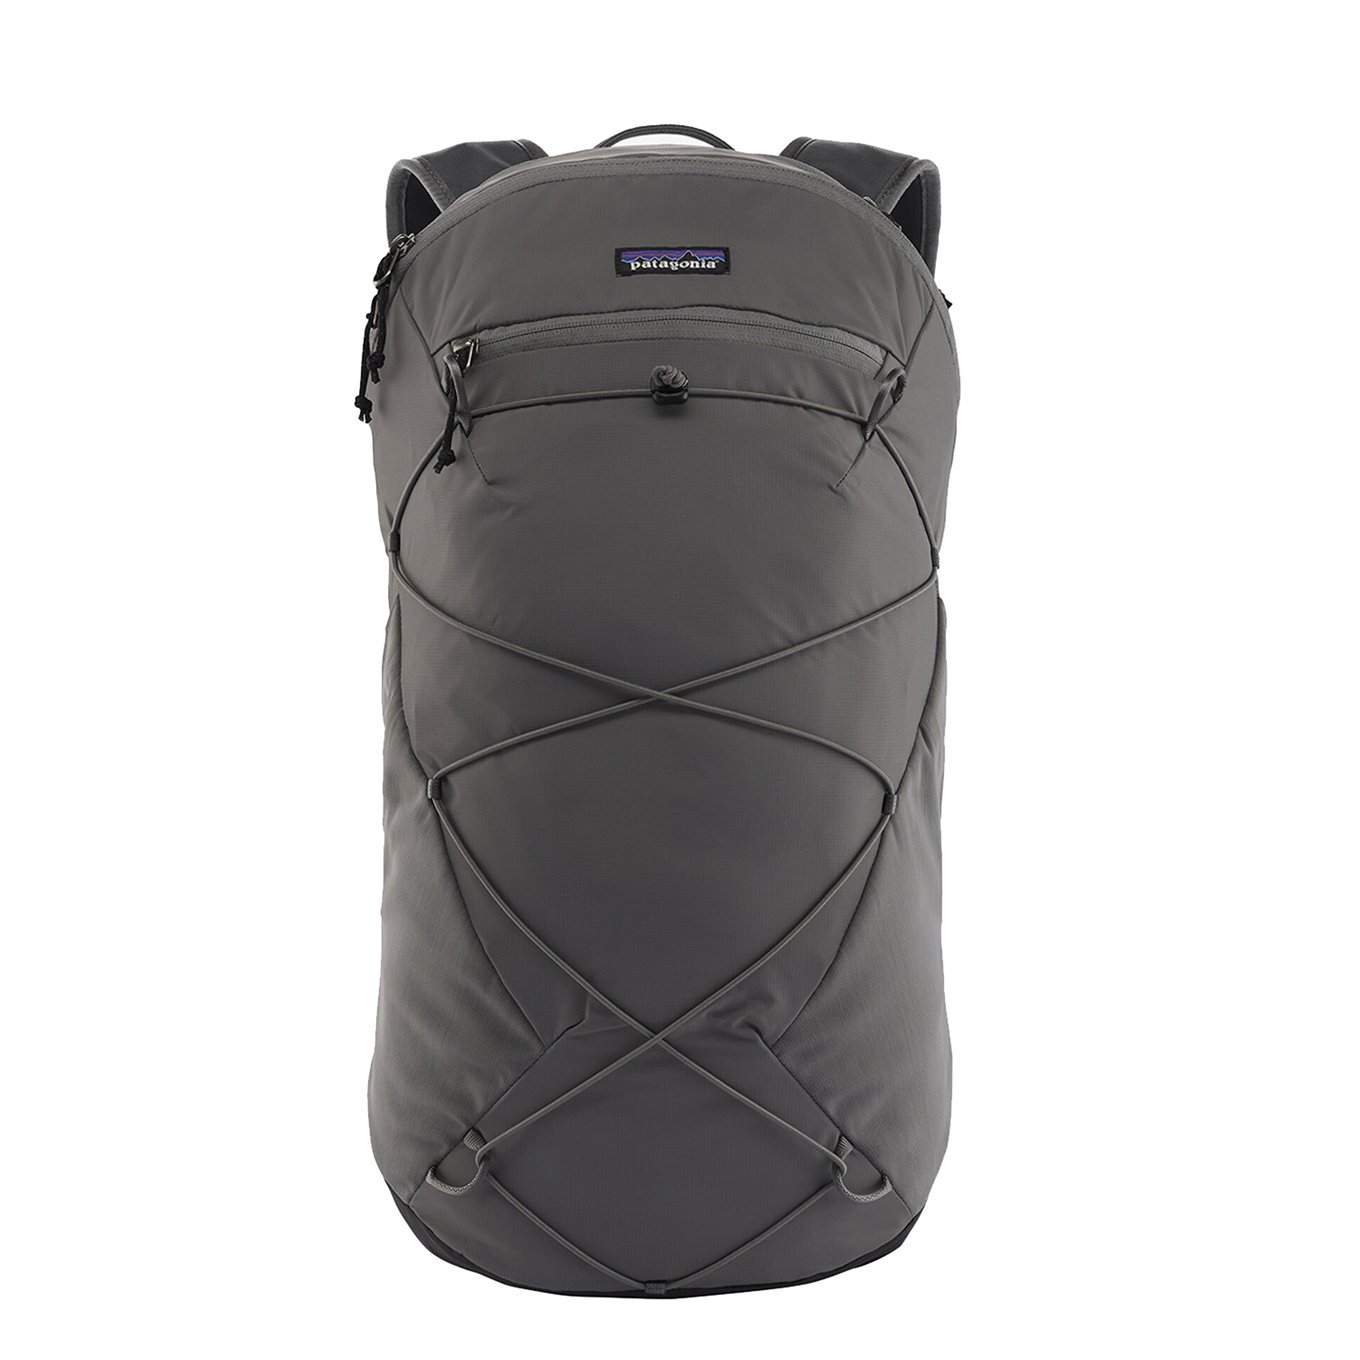 Patagonia Altvia Pack 22L L noble grey backpack